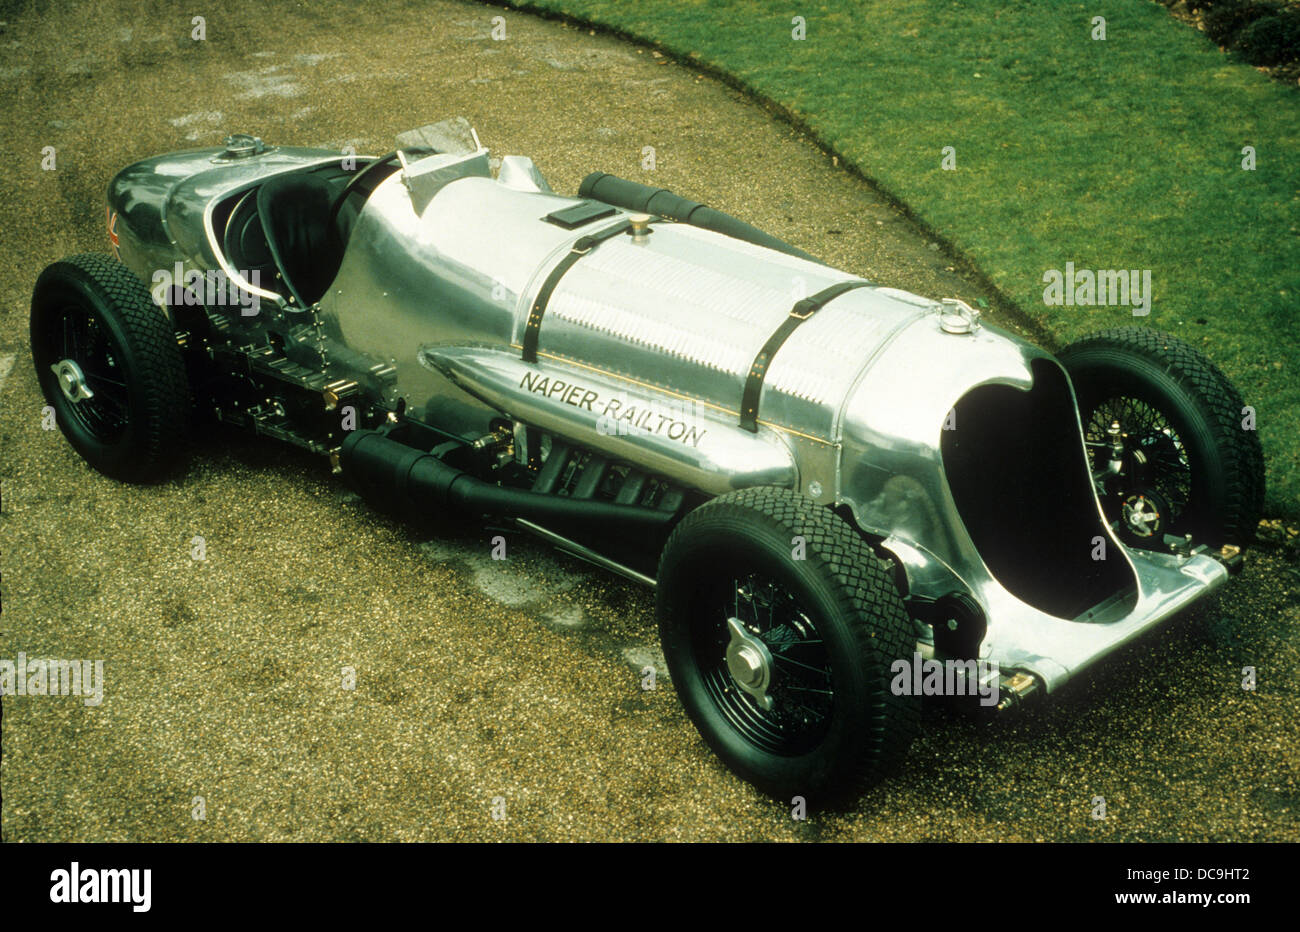 1933 NAPIER-RAILTON racing car Stock Photo